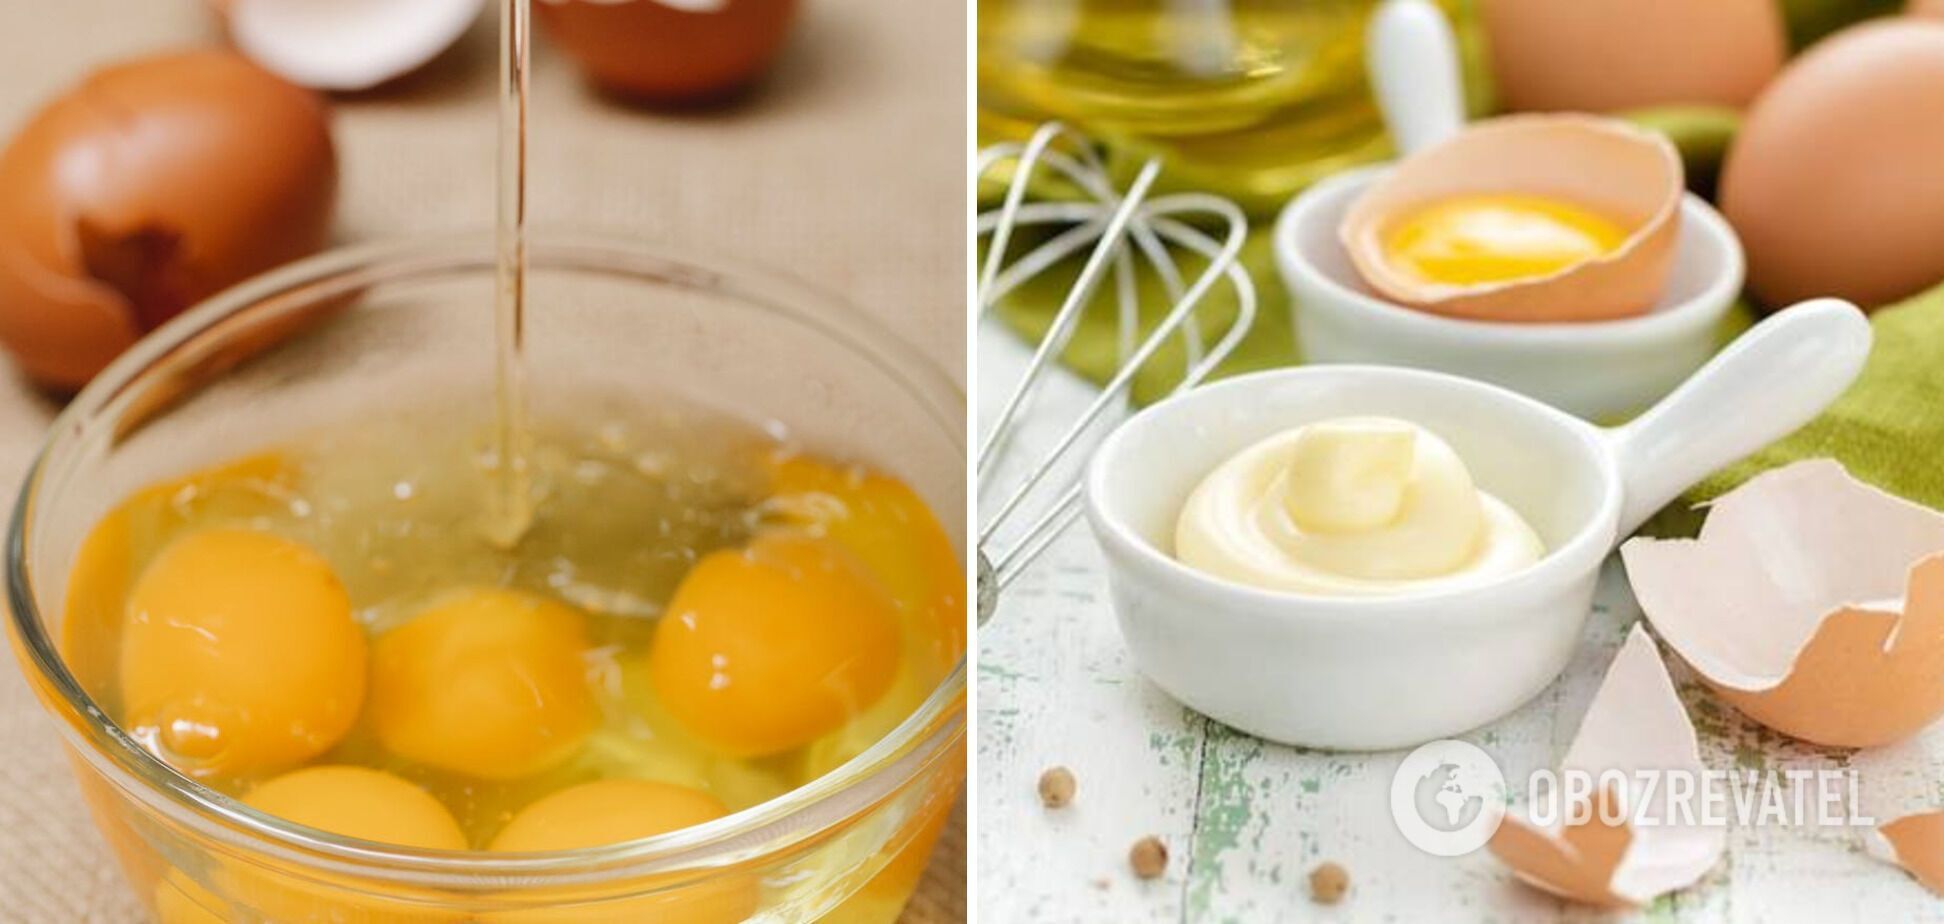 Making mayonnaise with egg yolks